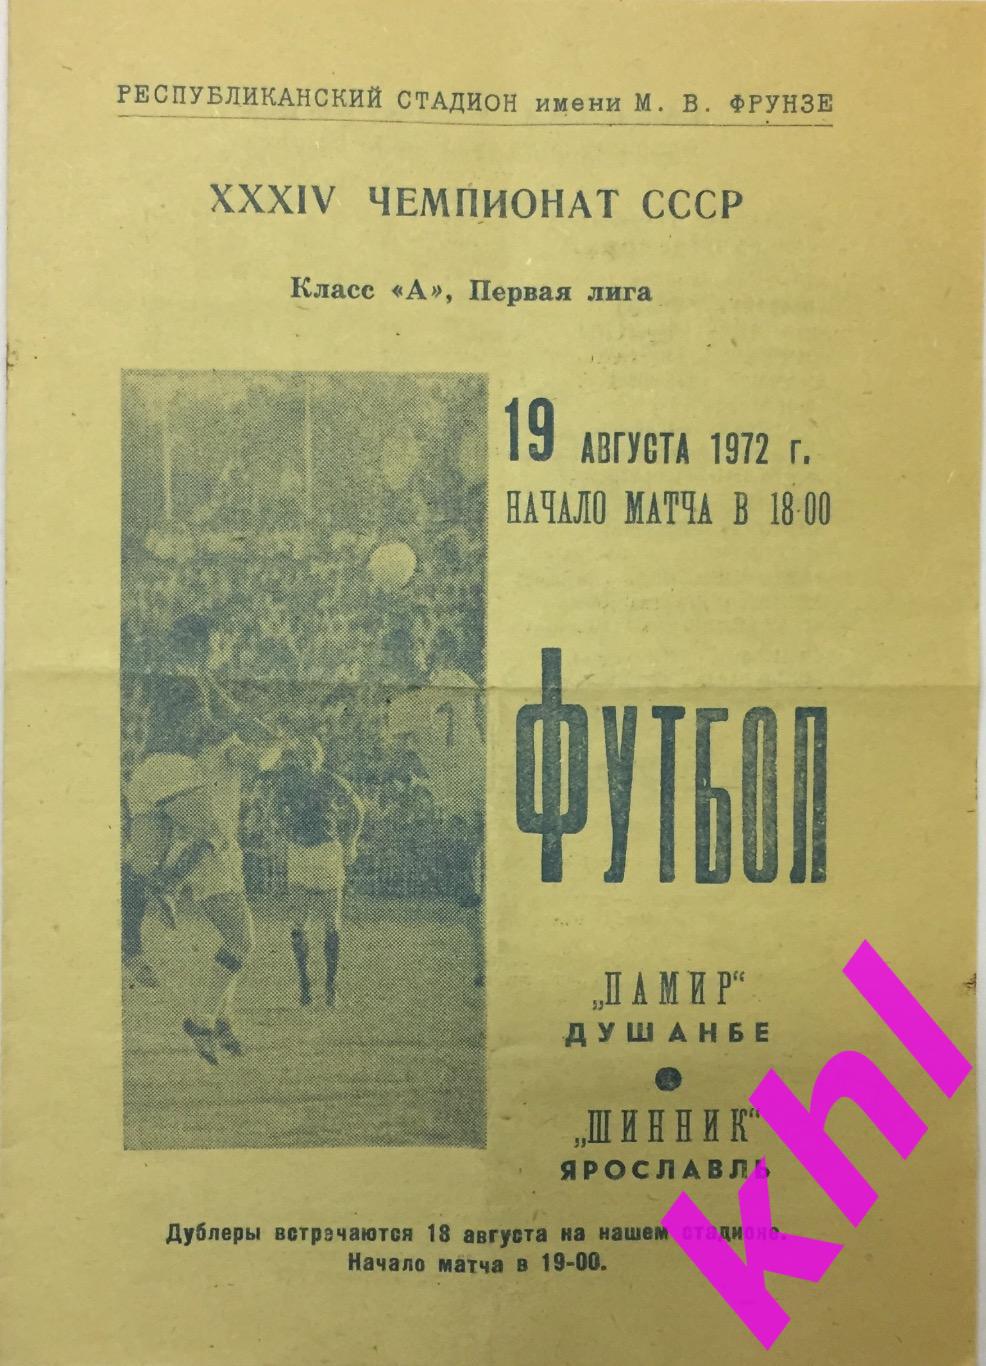 Памир Душанбе - Шинник Ярославль 19 августа 1972